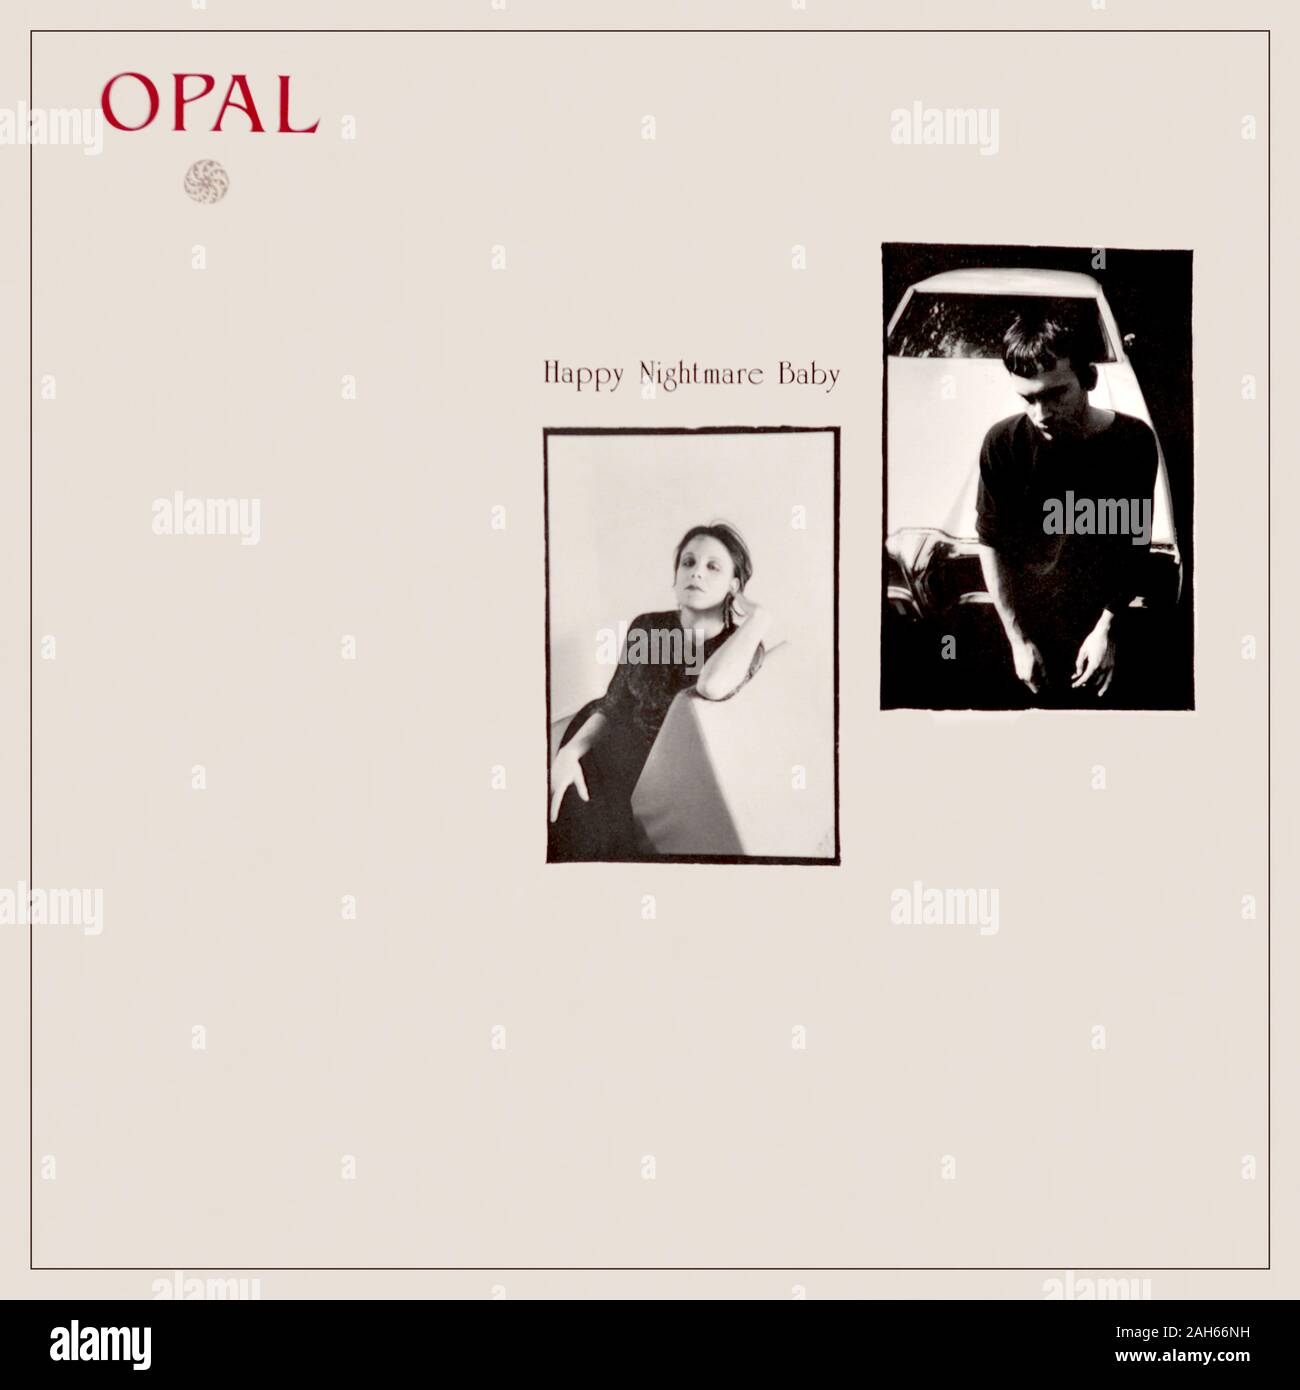 Opal - copertina originale in vinile - Happy Nightmare Baby - 1987 Foto Stock